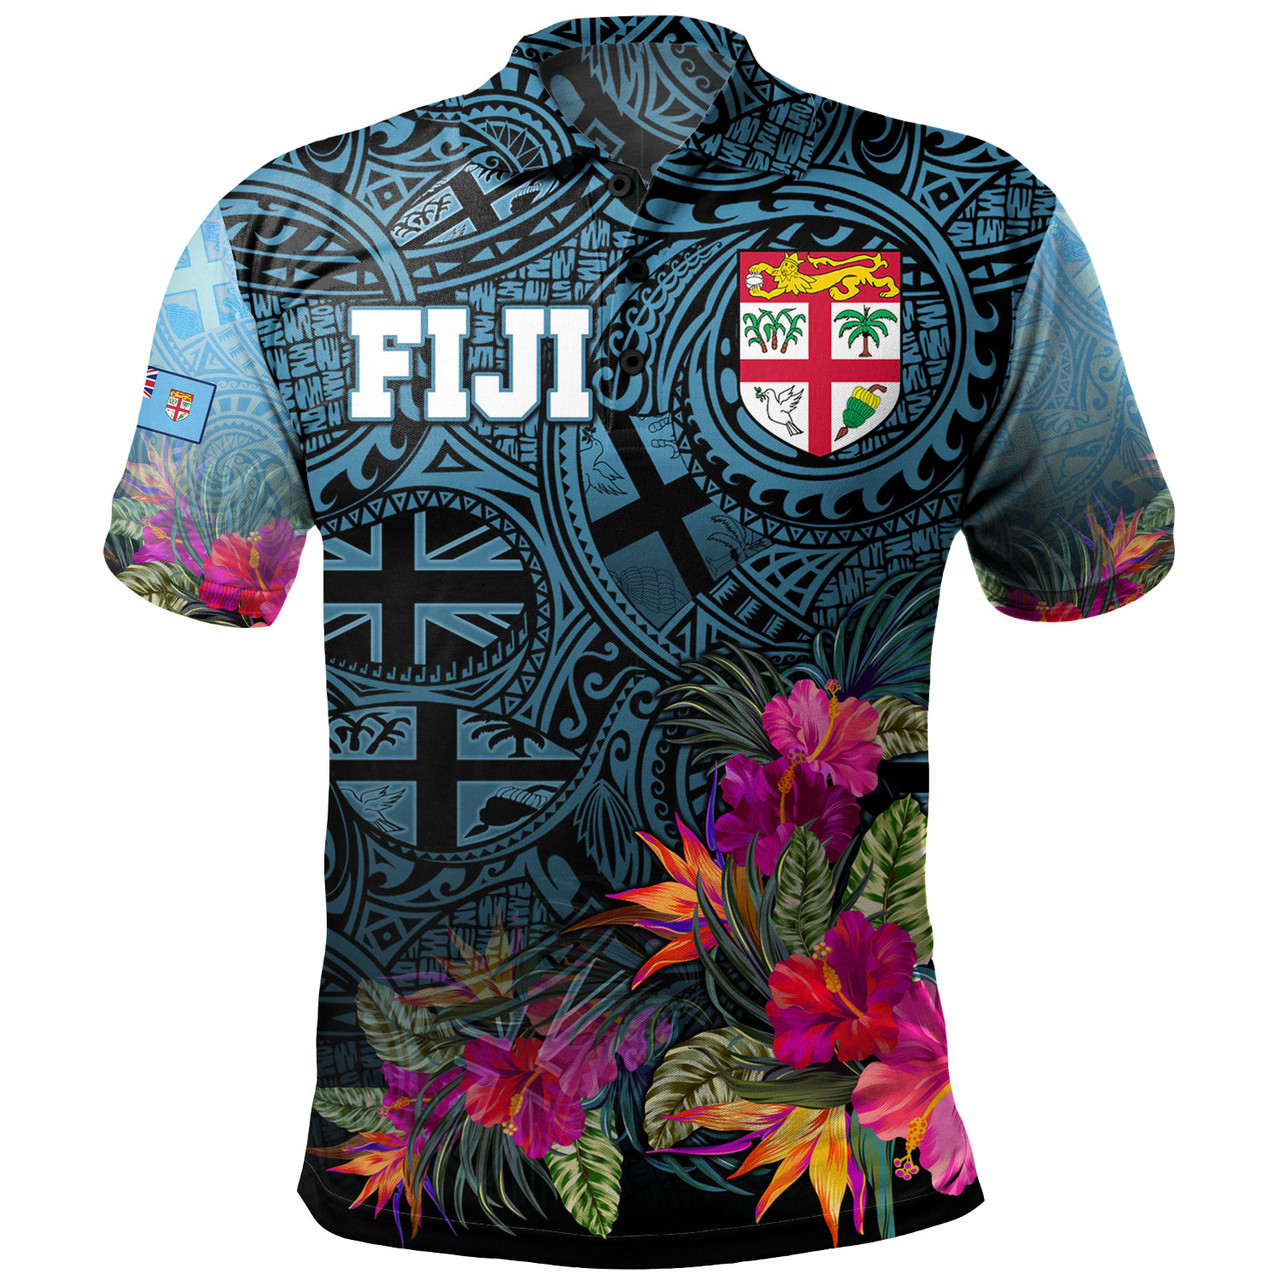 Fiji Polo Shirt - Fiji Seal With Tapa Patterns Tropical Flowers Design